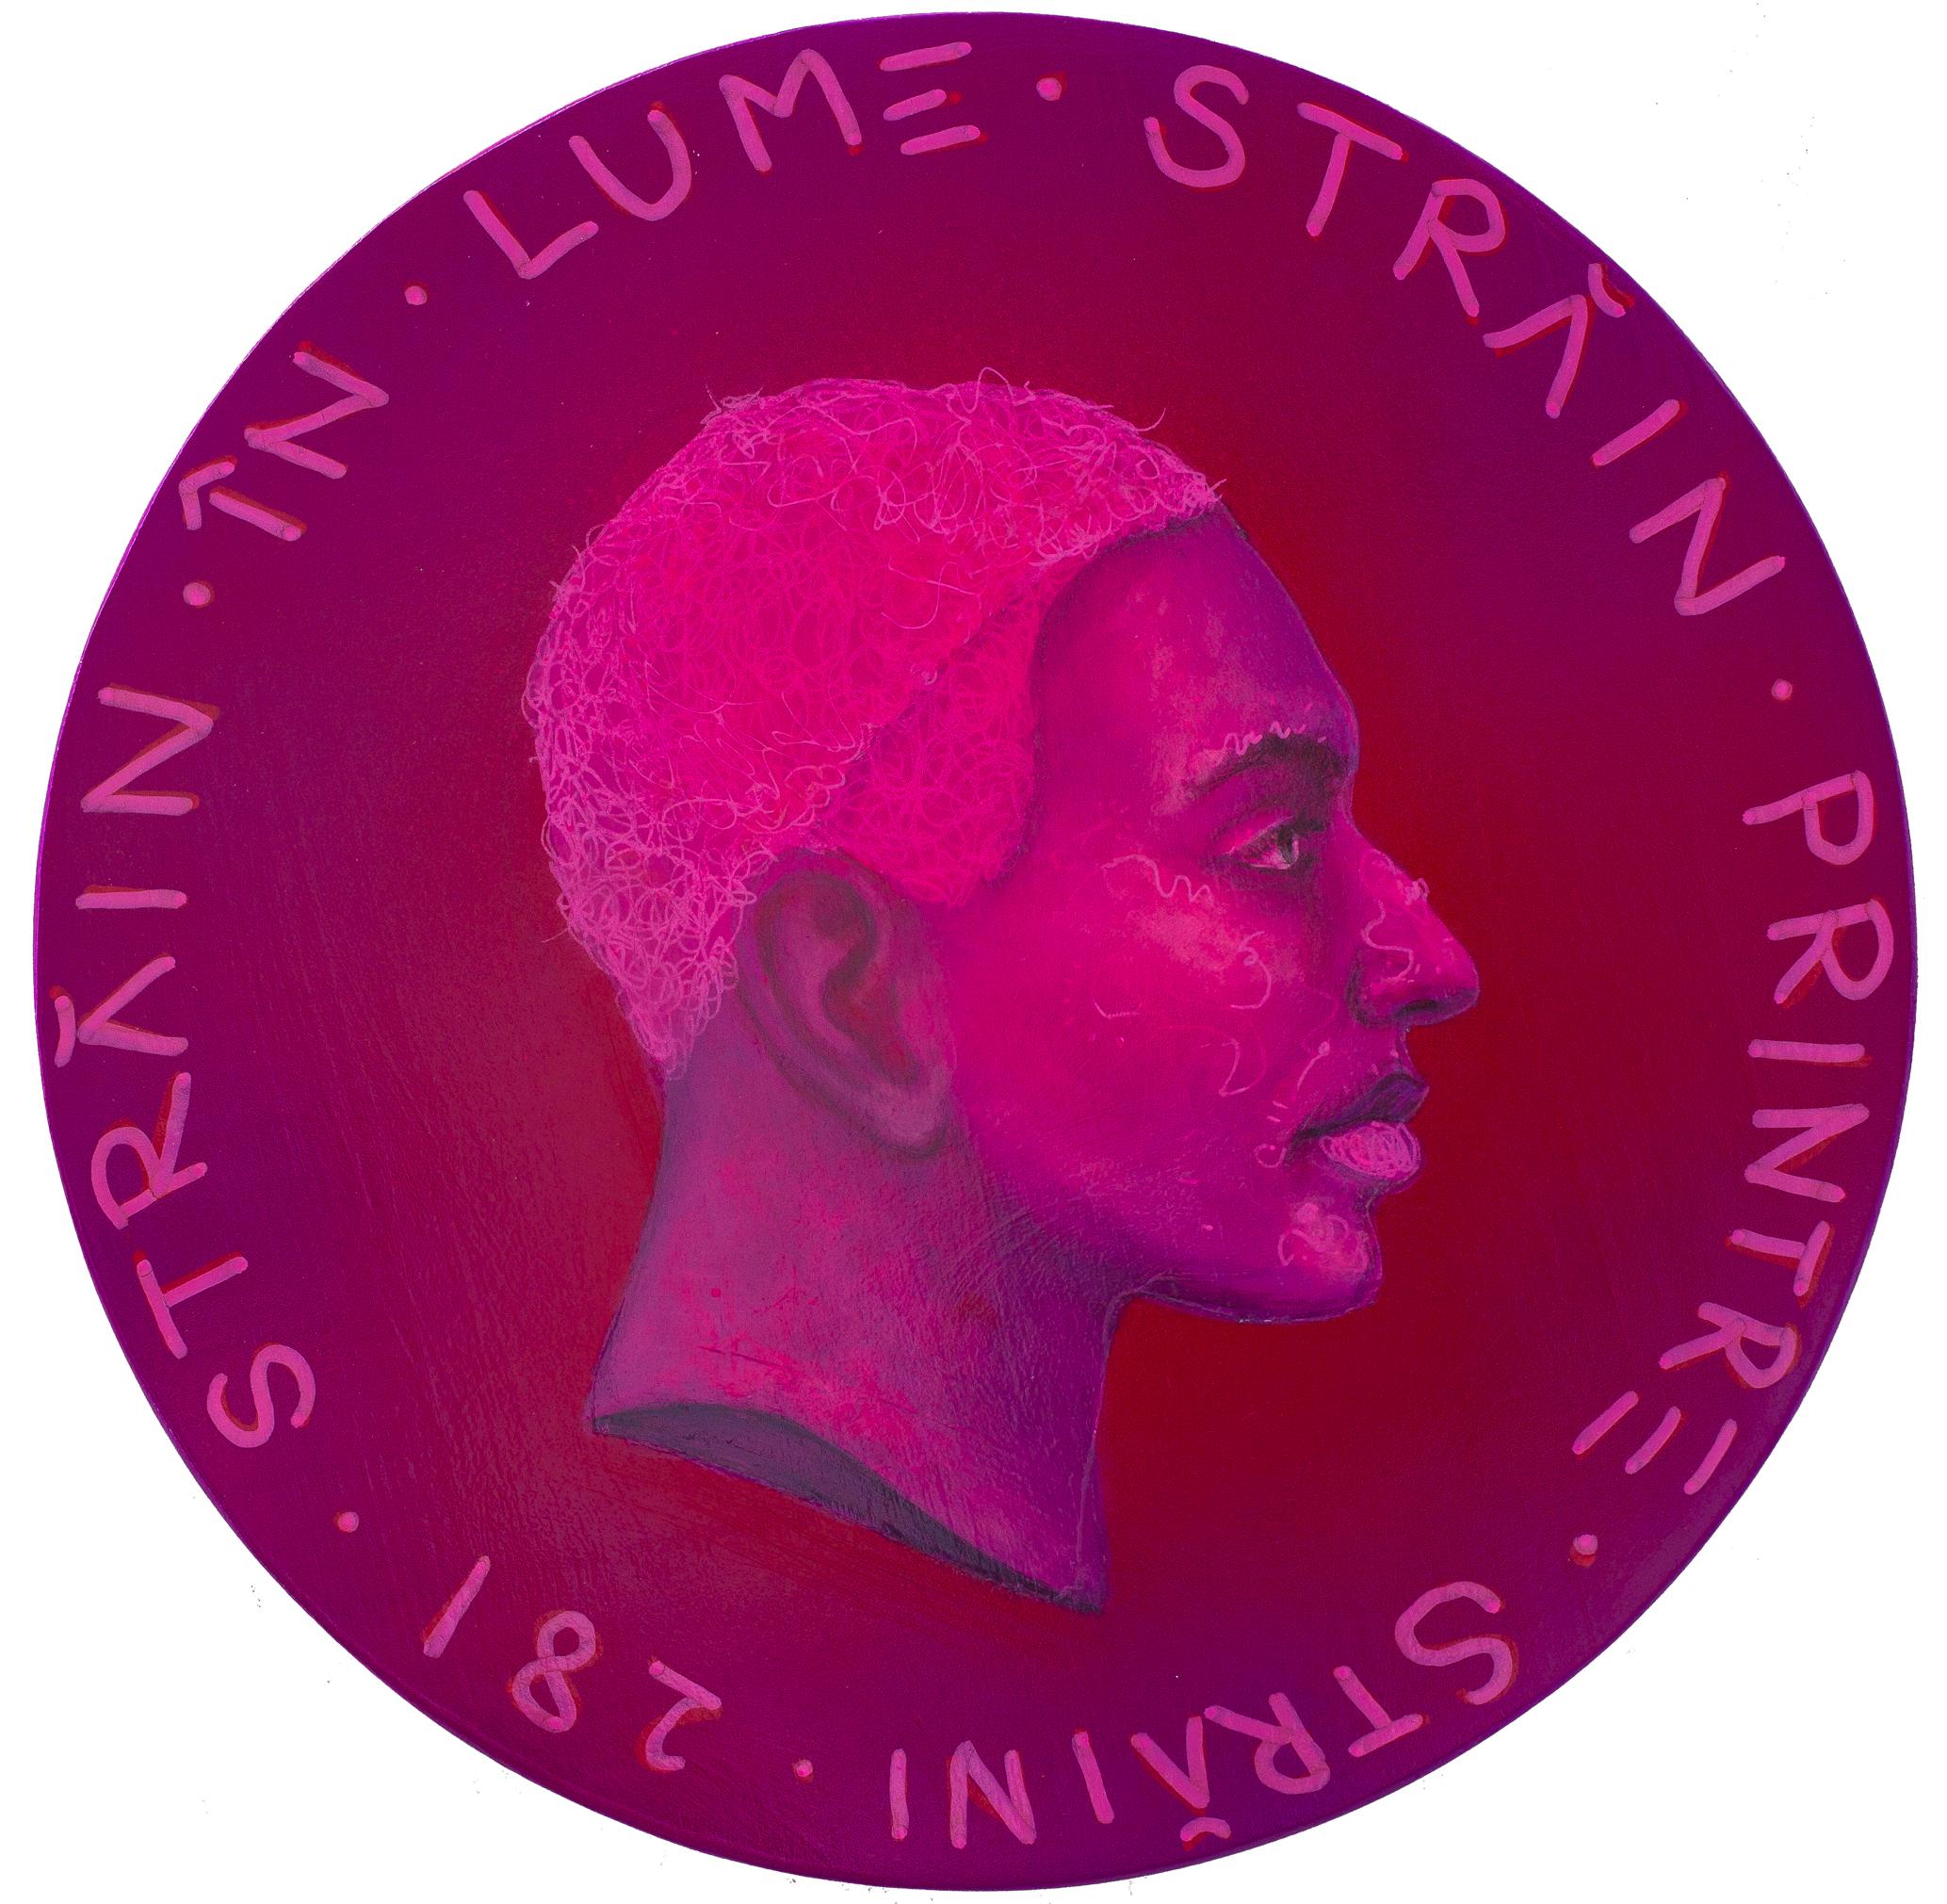 Pop Surrealist Portrait on Wood. Romanian. Vibrant Pink Fluor. "Currency #211"